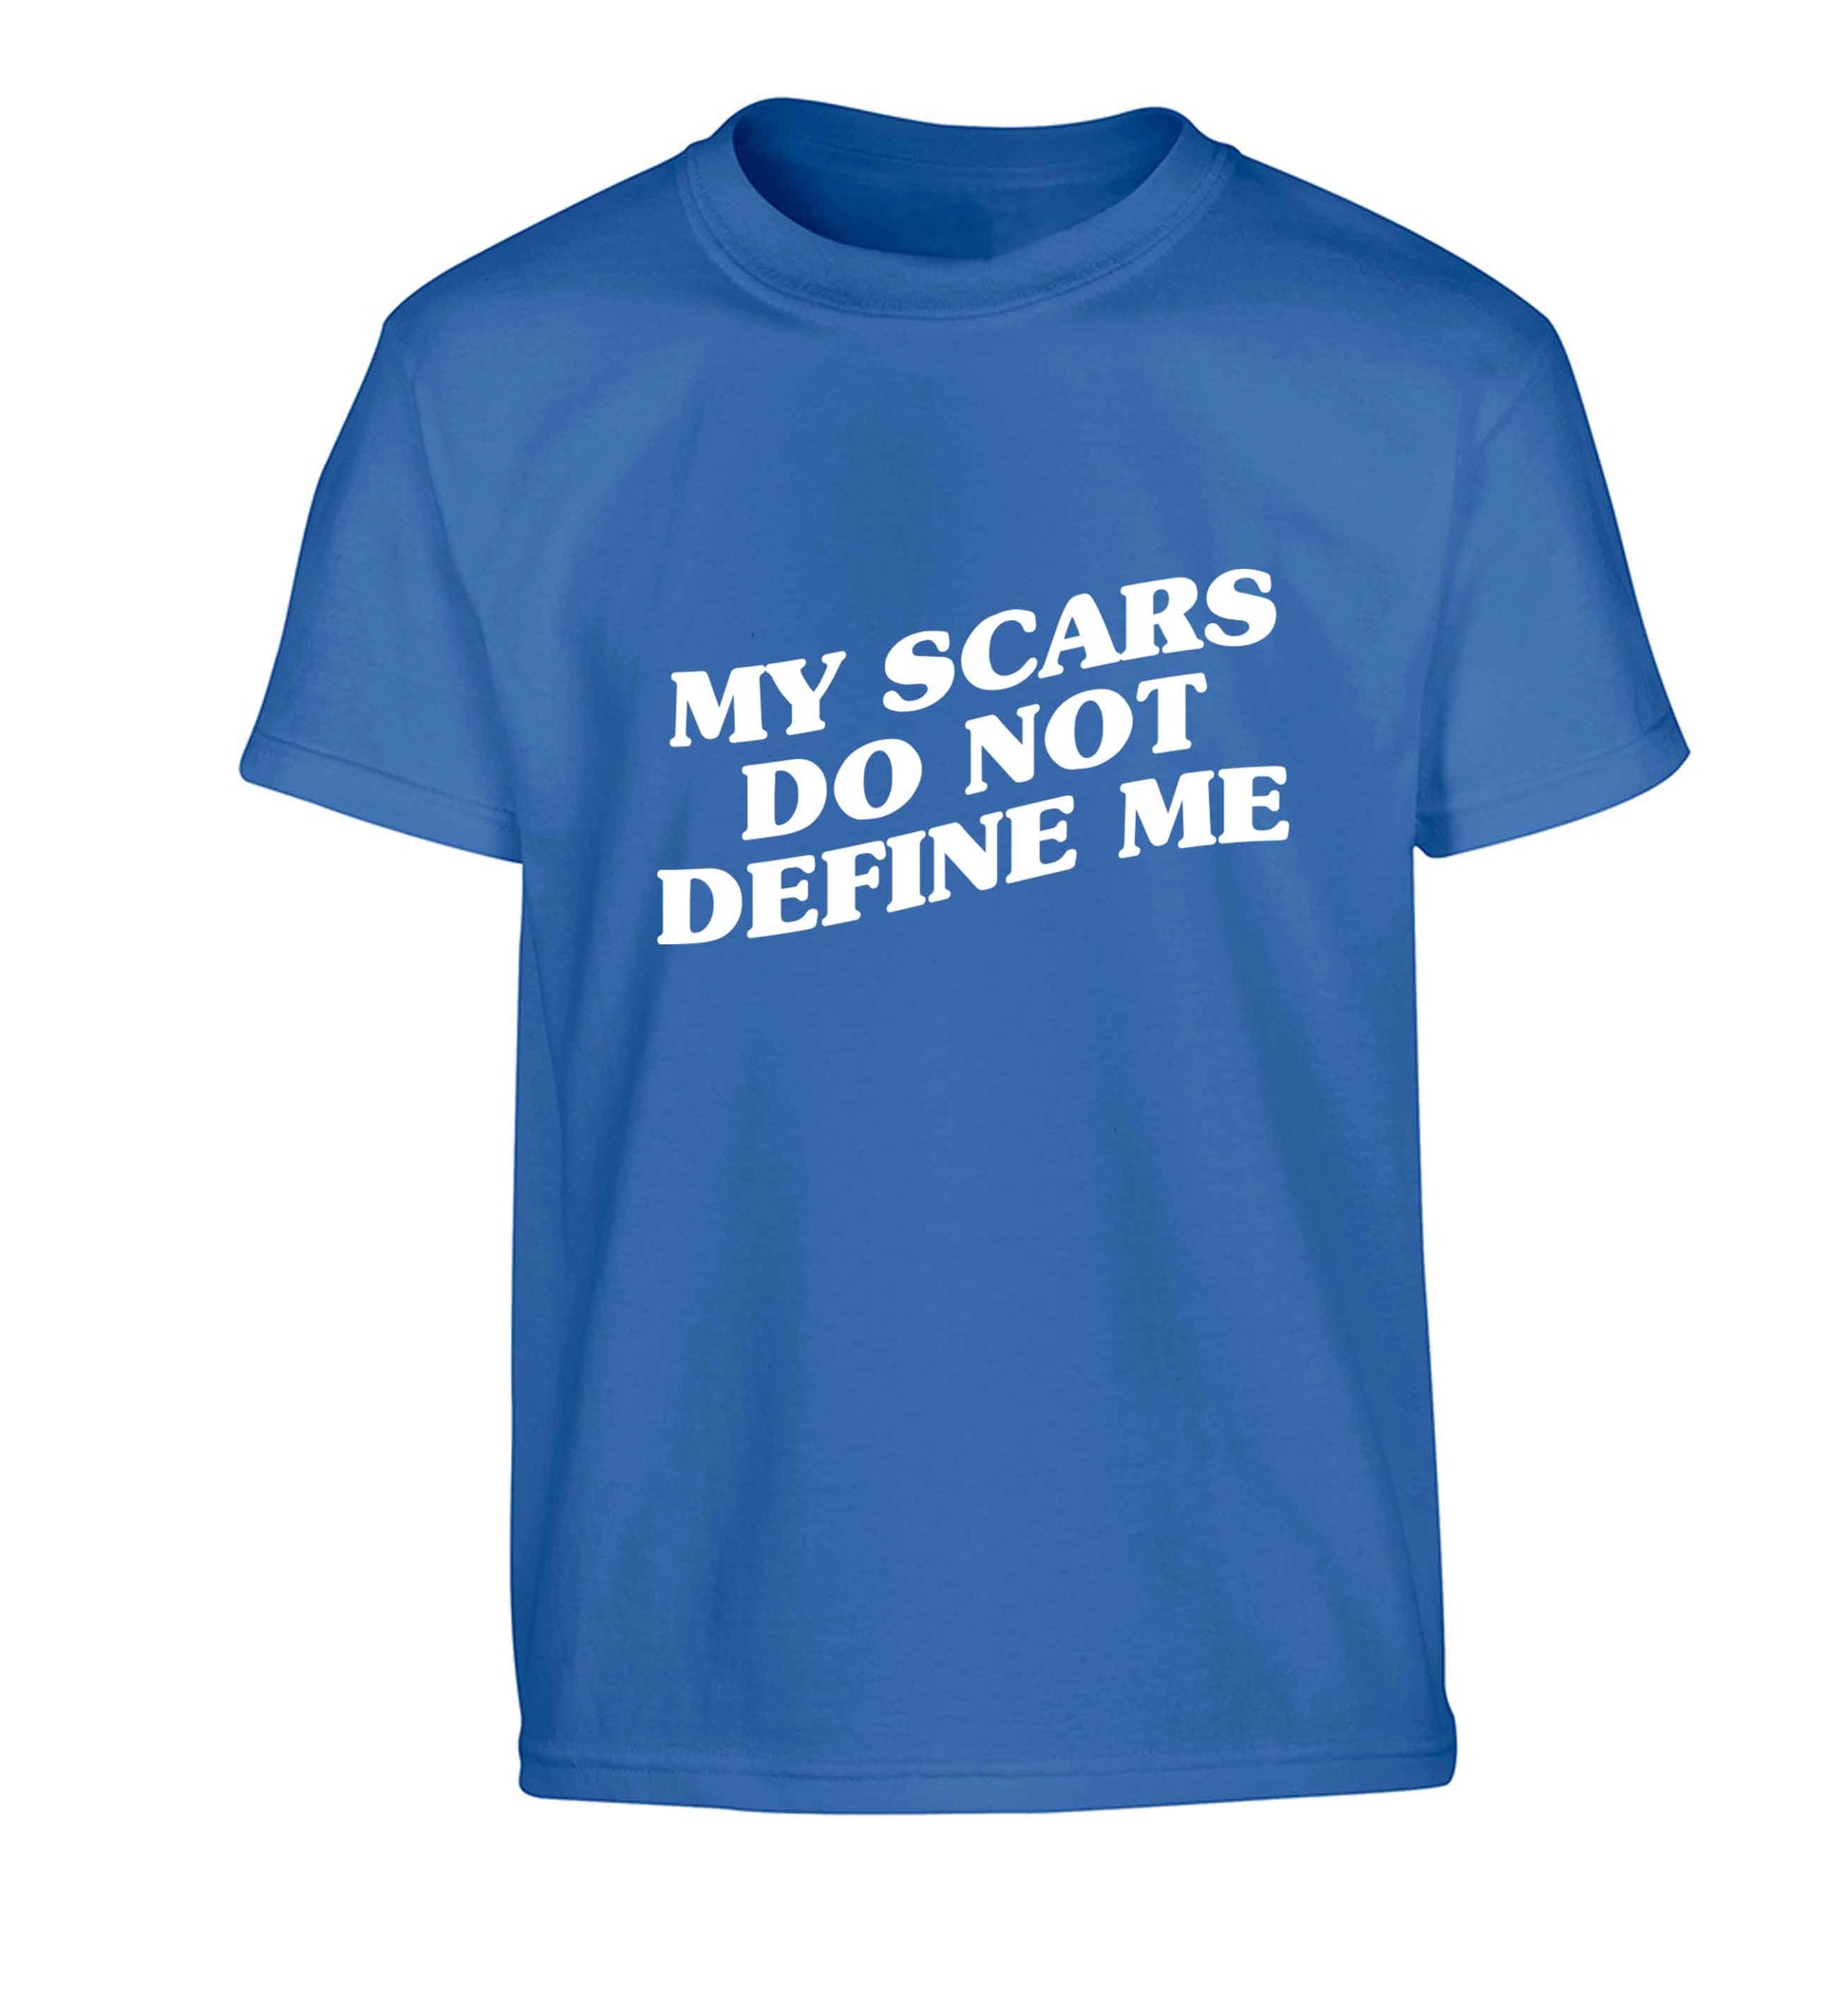 My scars do not define me Children's blue Tshirt 12-13 Years